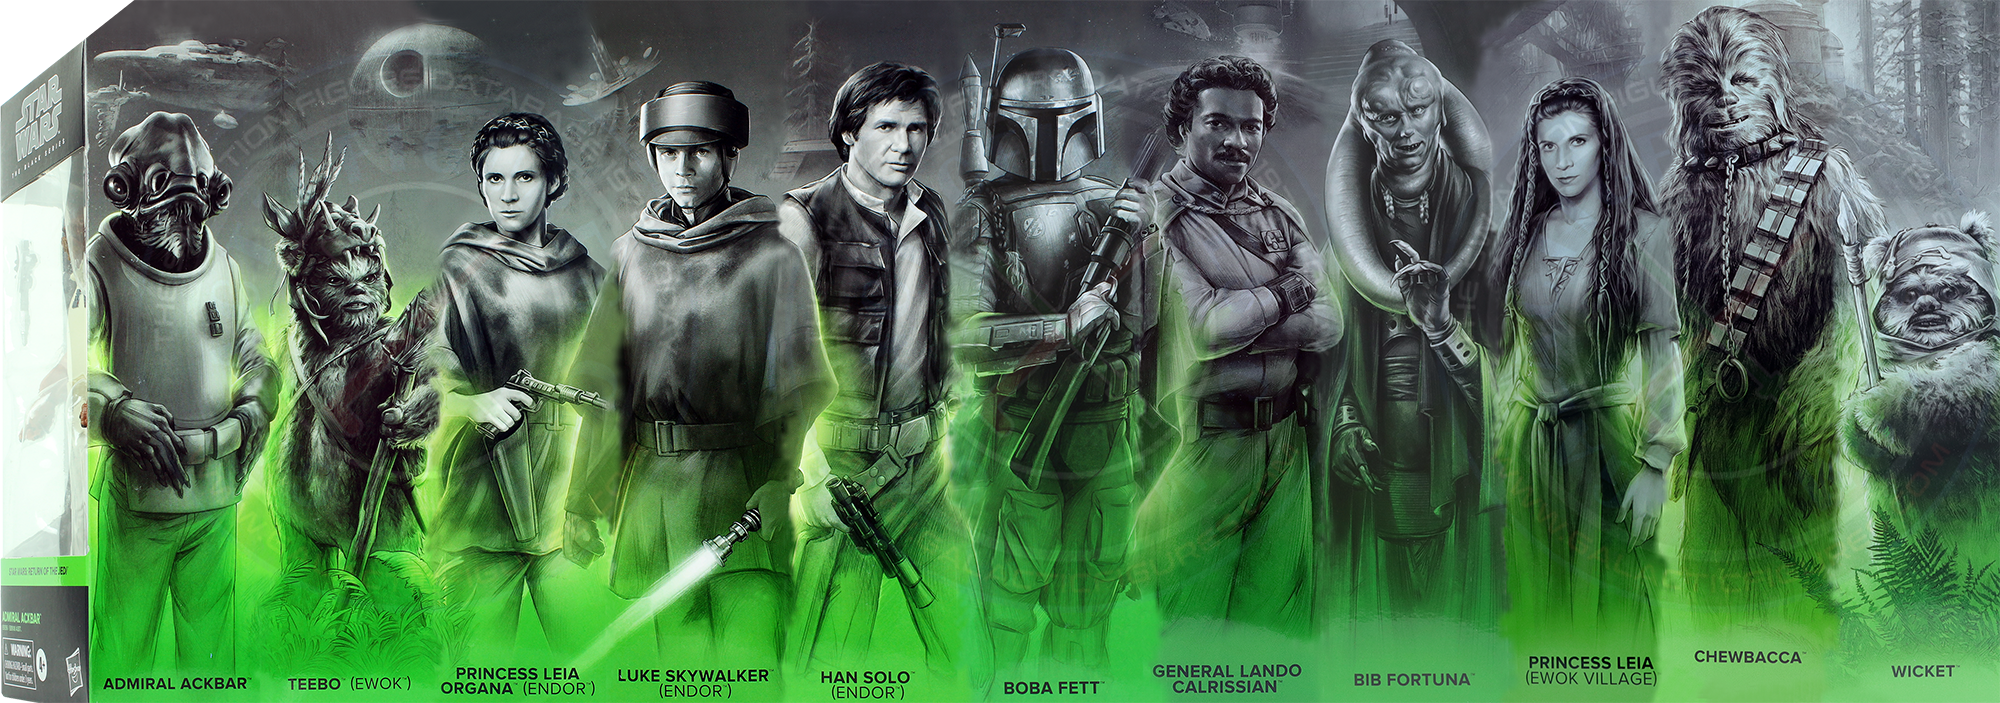 Lando Calrissian as part of the Black Series Mural